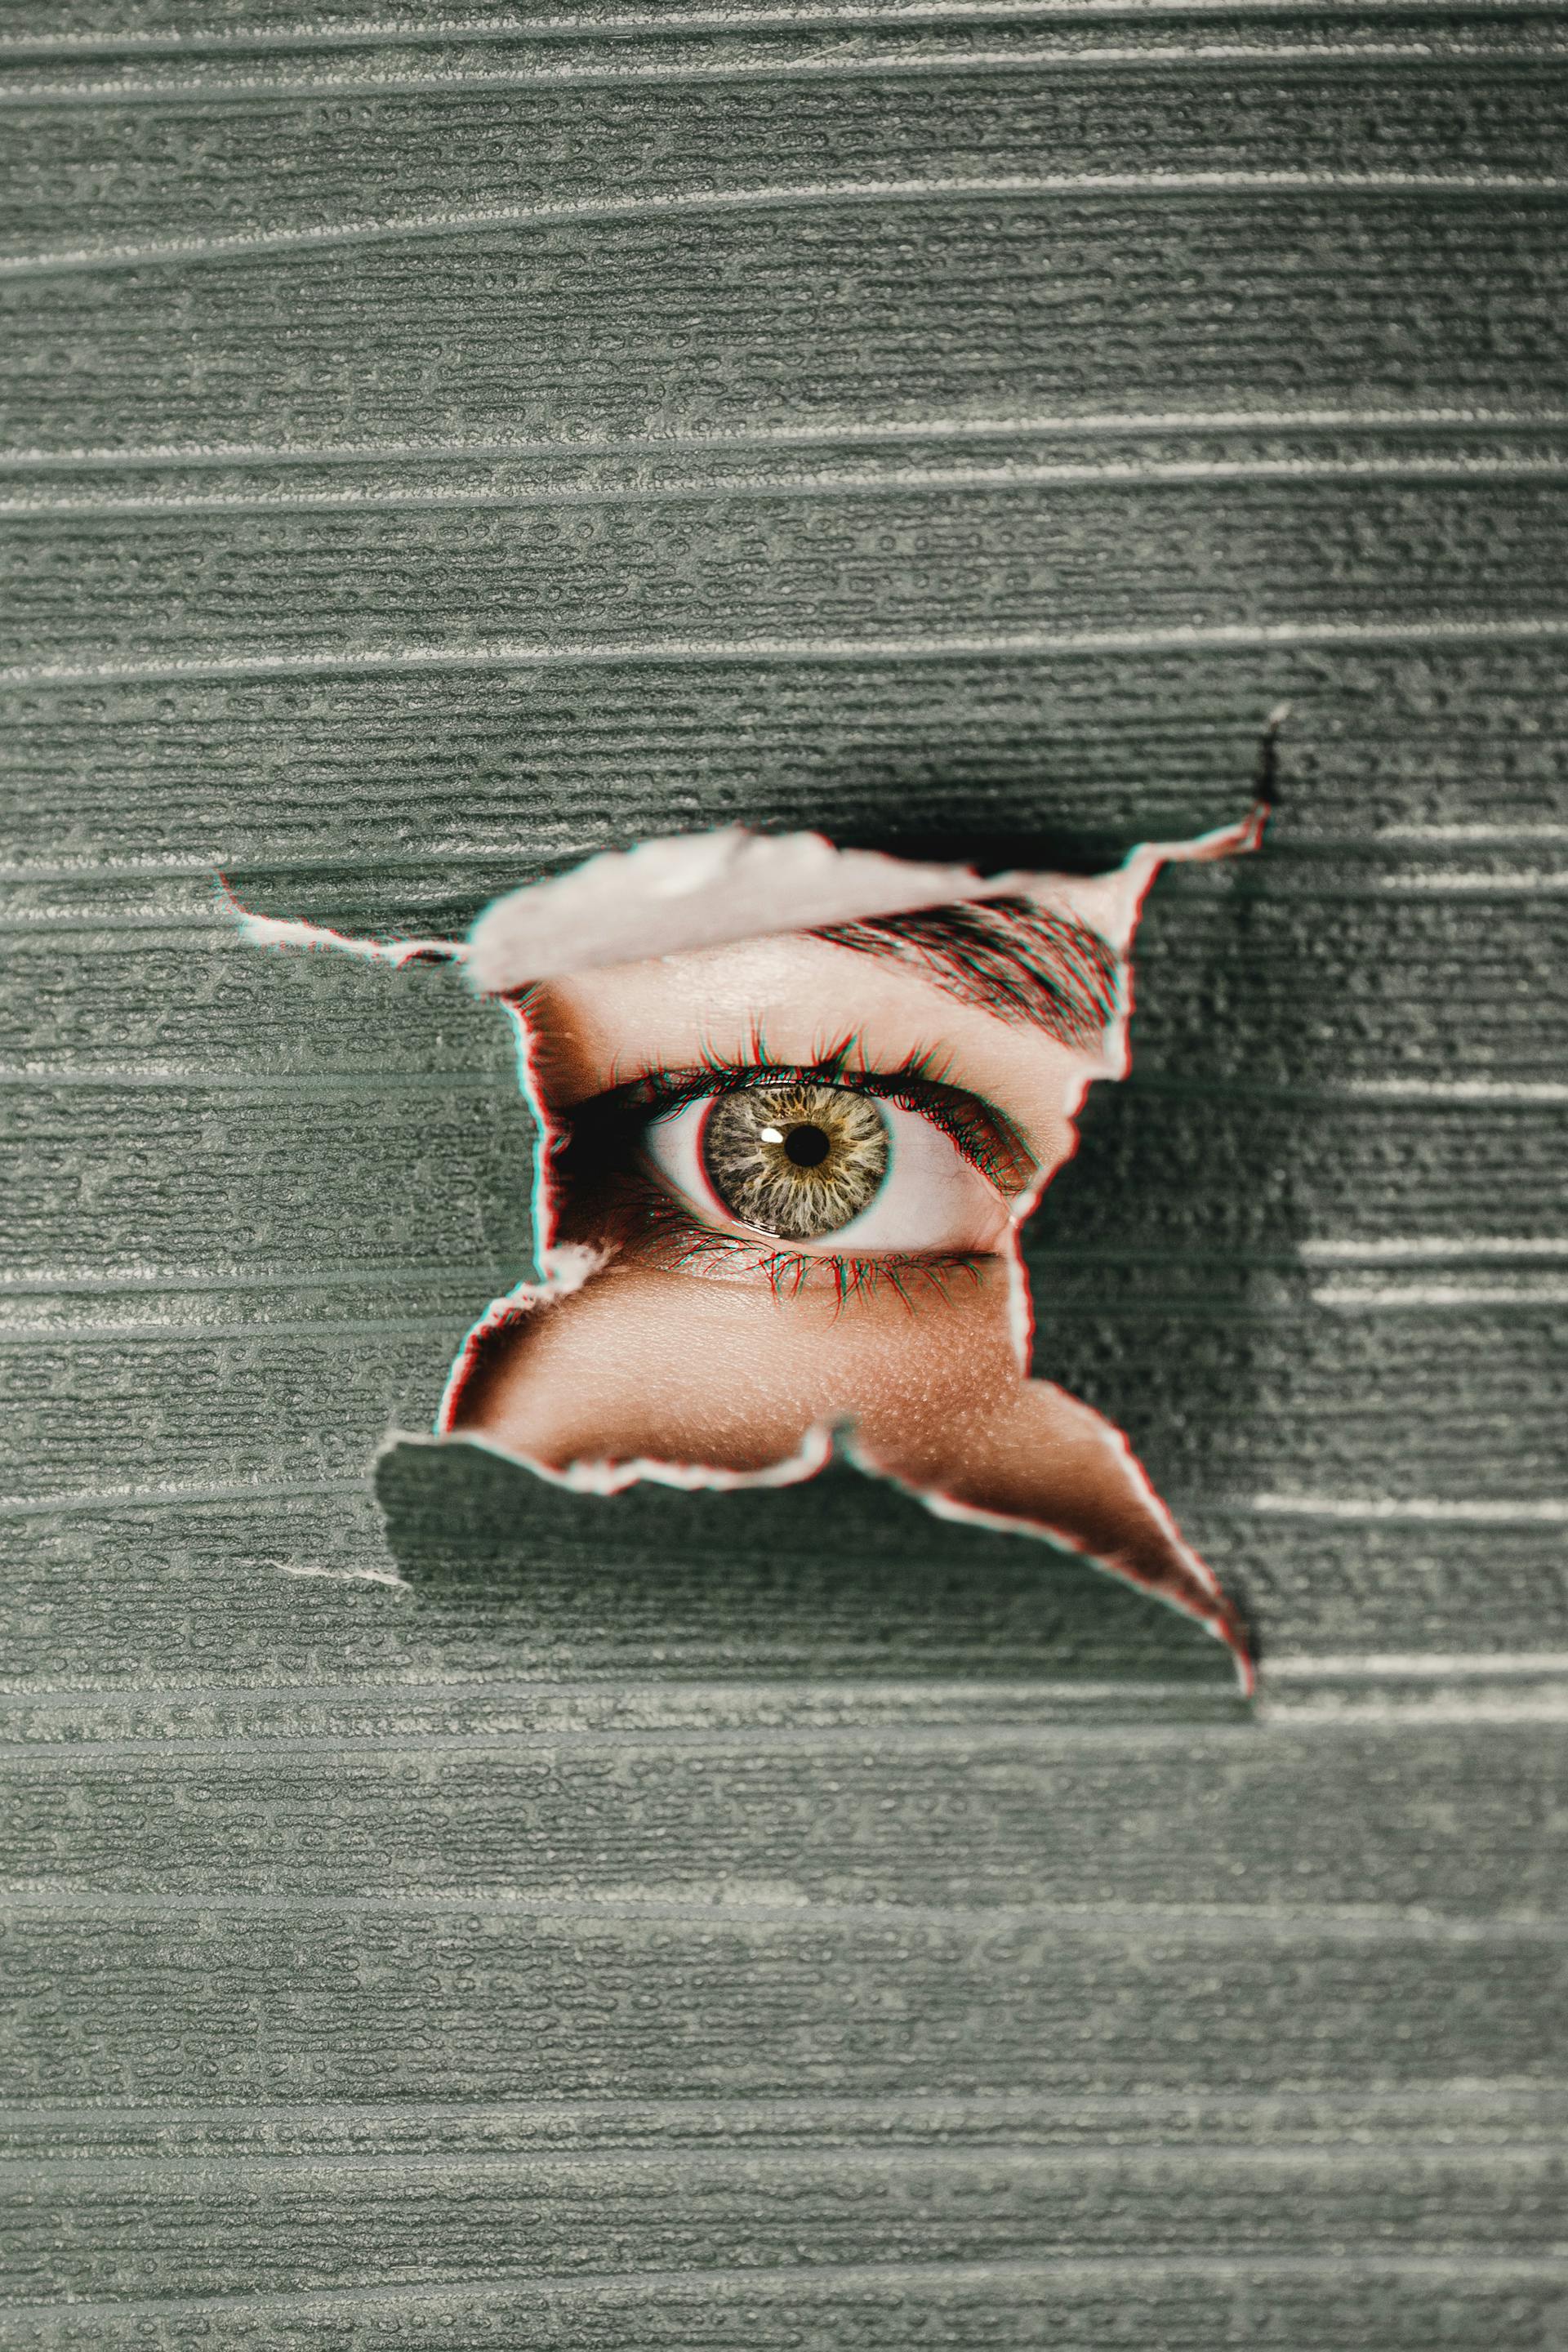 An eye peering through a wall | Source: Pexels